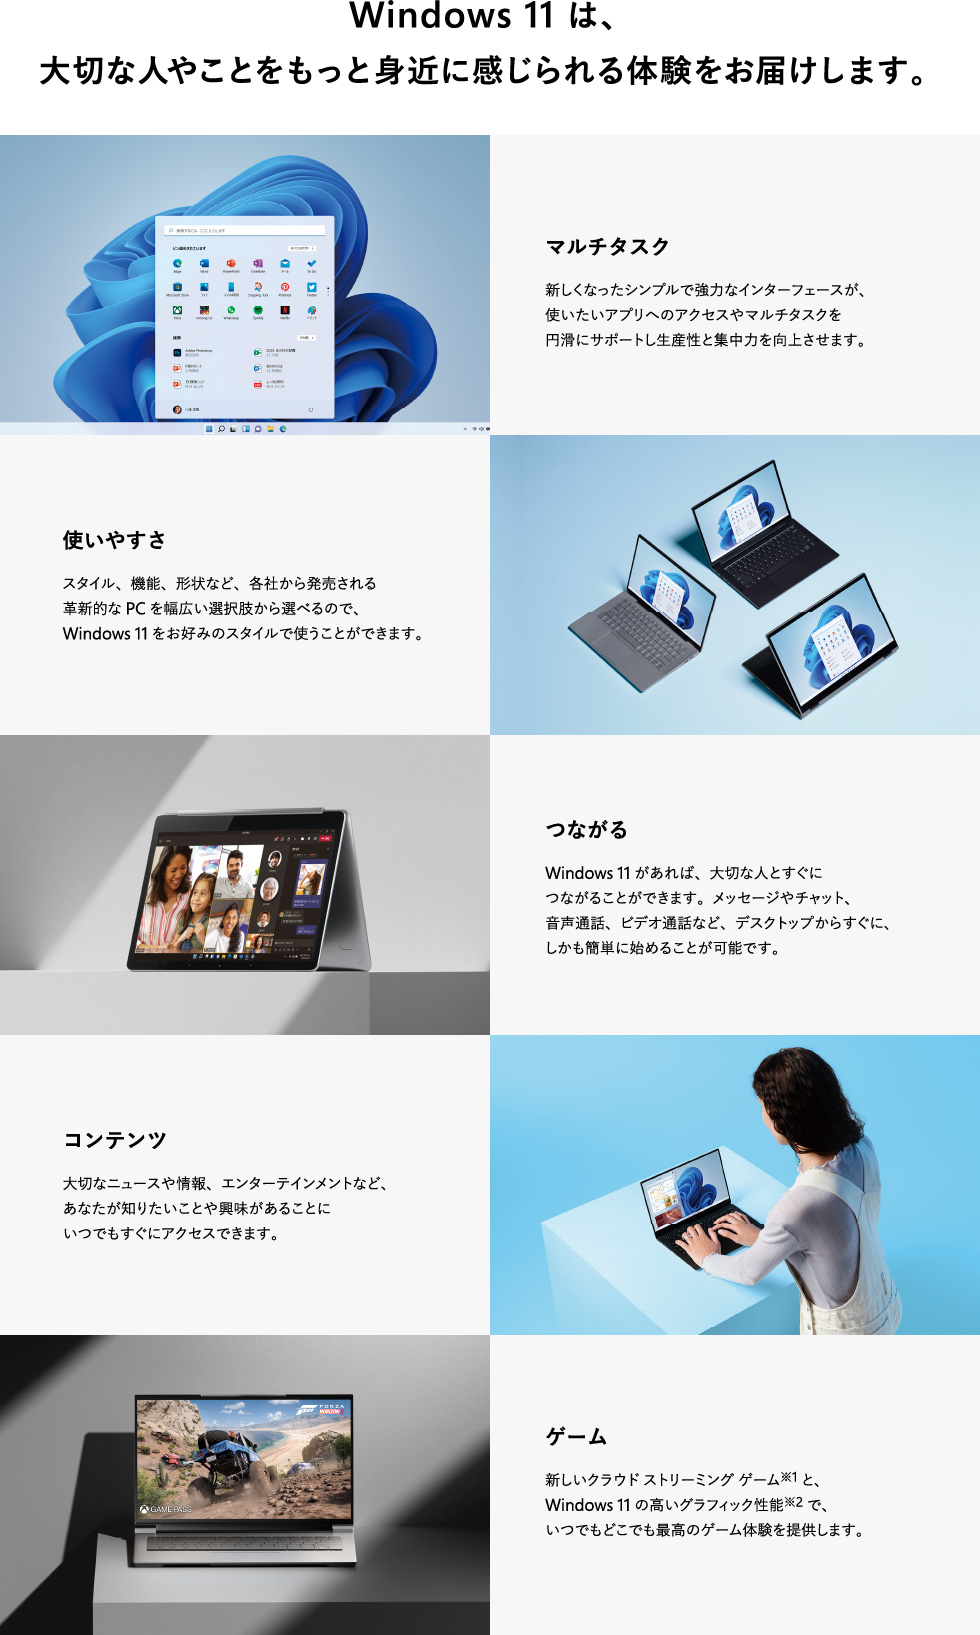 Windows 11 Home 日本語版 (ダウンロード) | パソコン工房